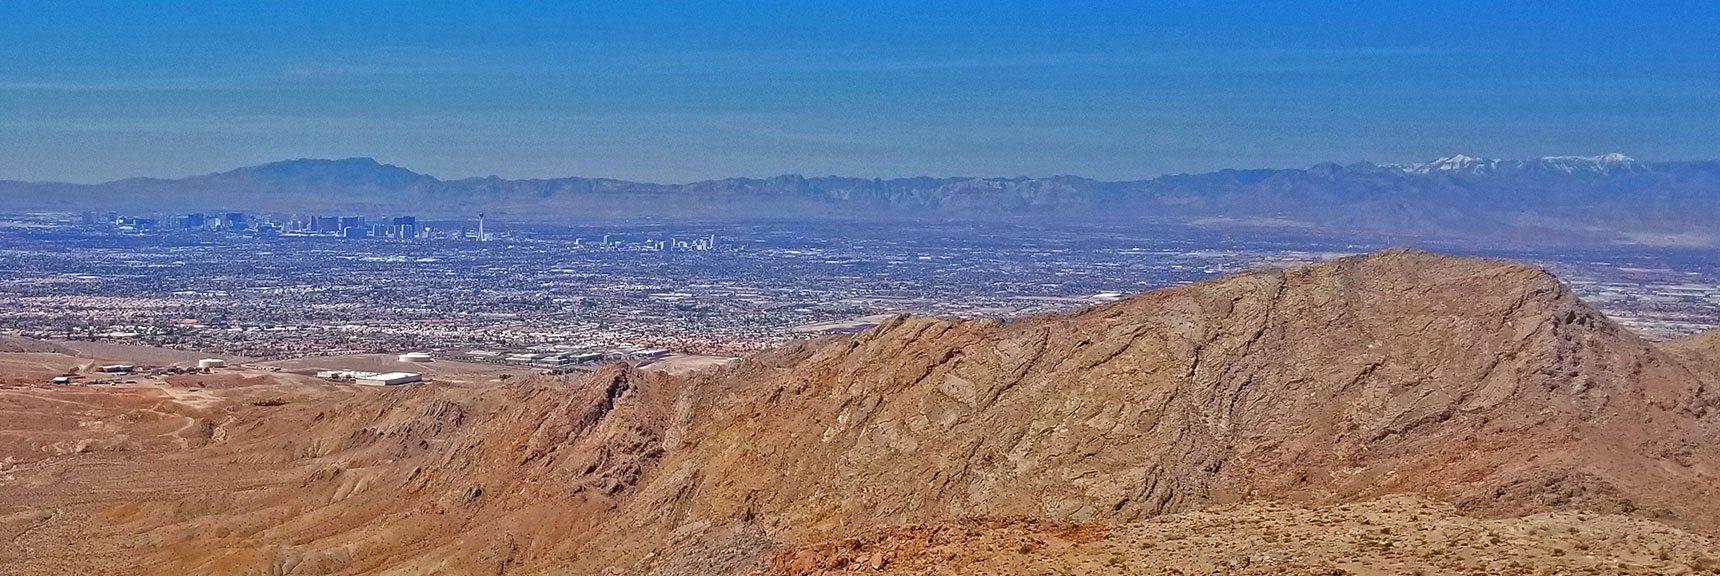 Larger View of Potosi Mt, Rainbow Mts, La Madre Mts, Mt Charleston Wilderness | Sunrise Mountain, Las Vegas, Nevada